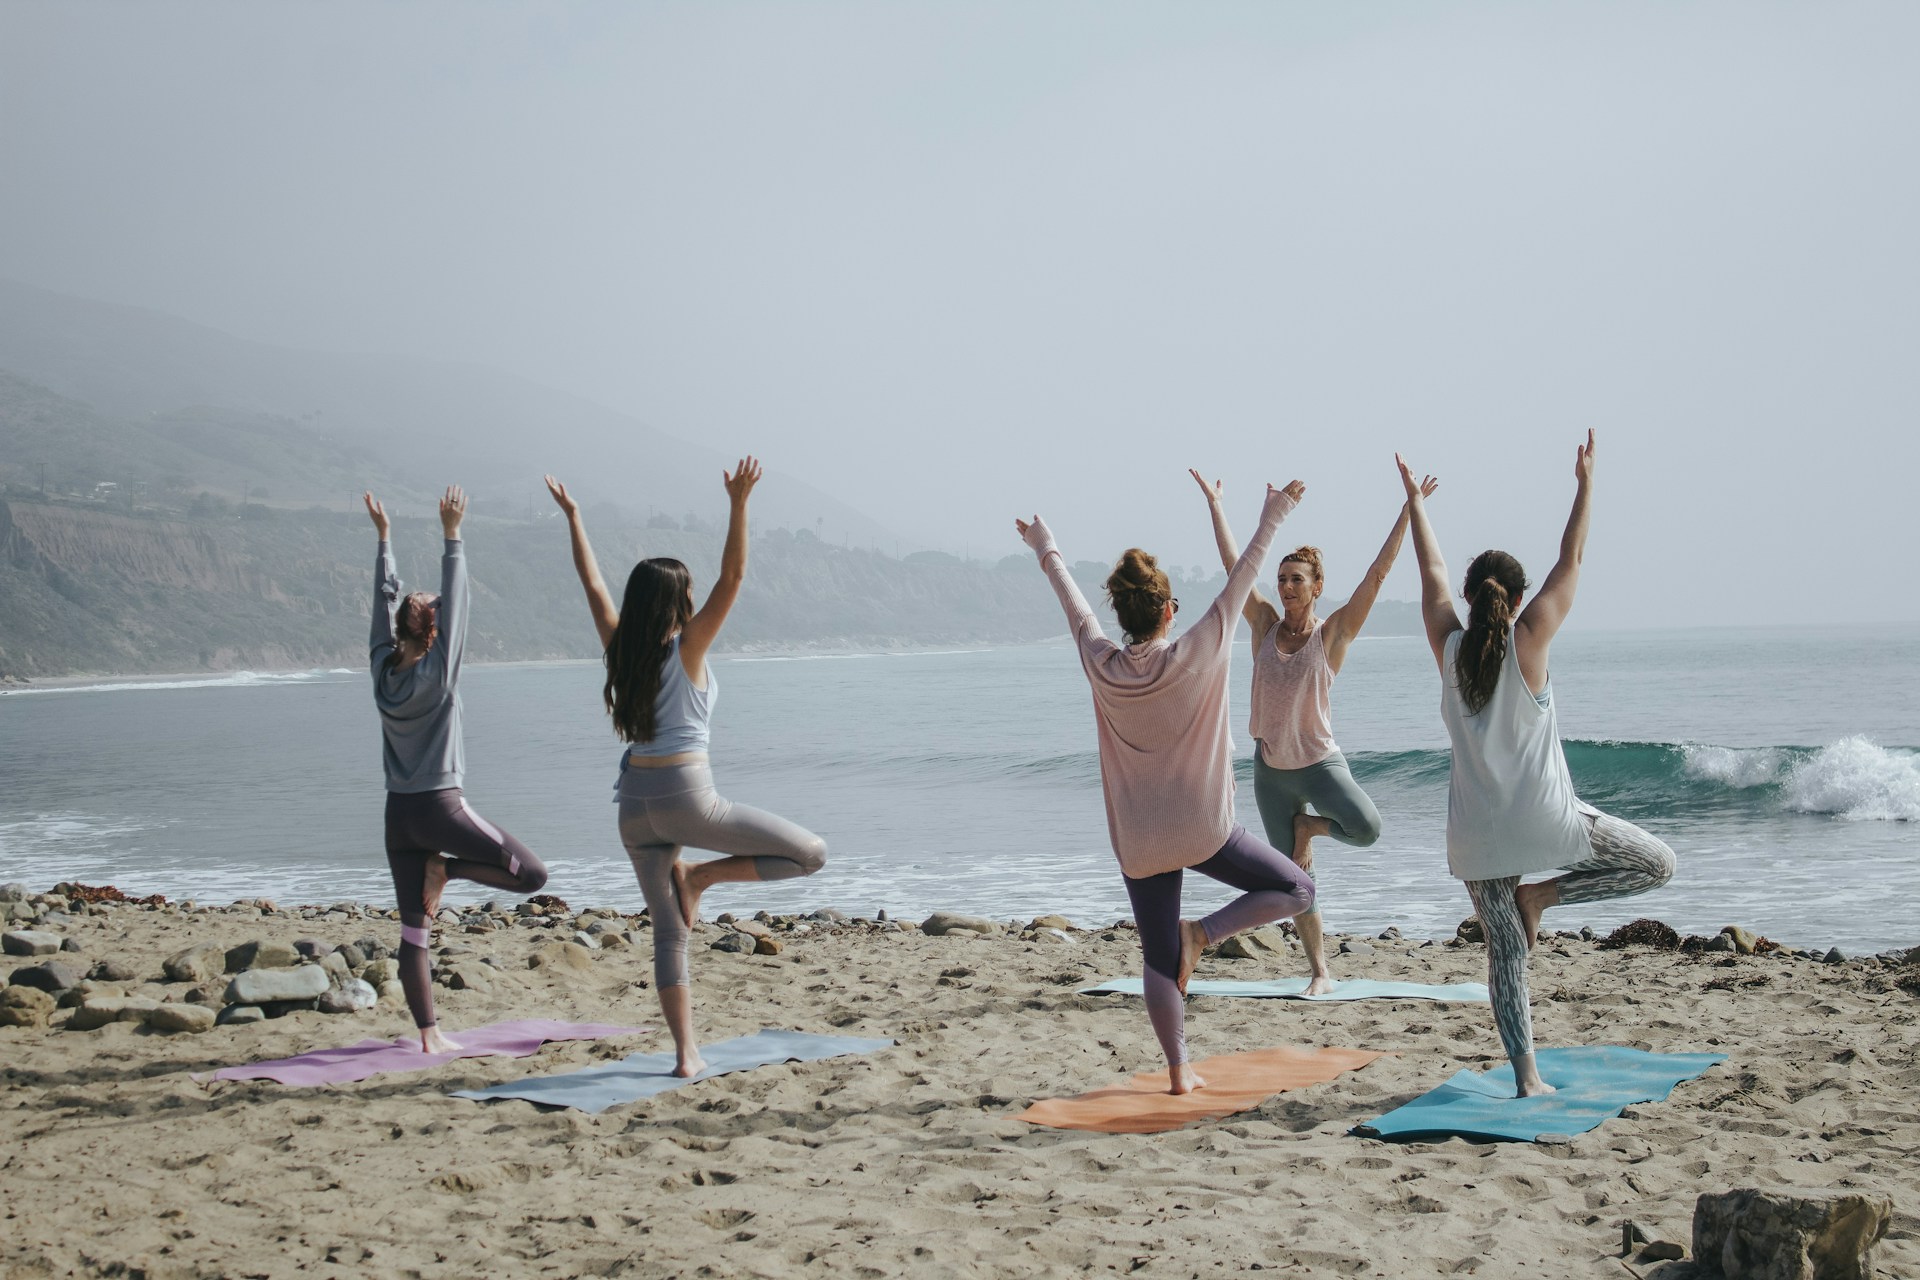 A group of women on the beach, enjoying a yoga meditation session